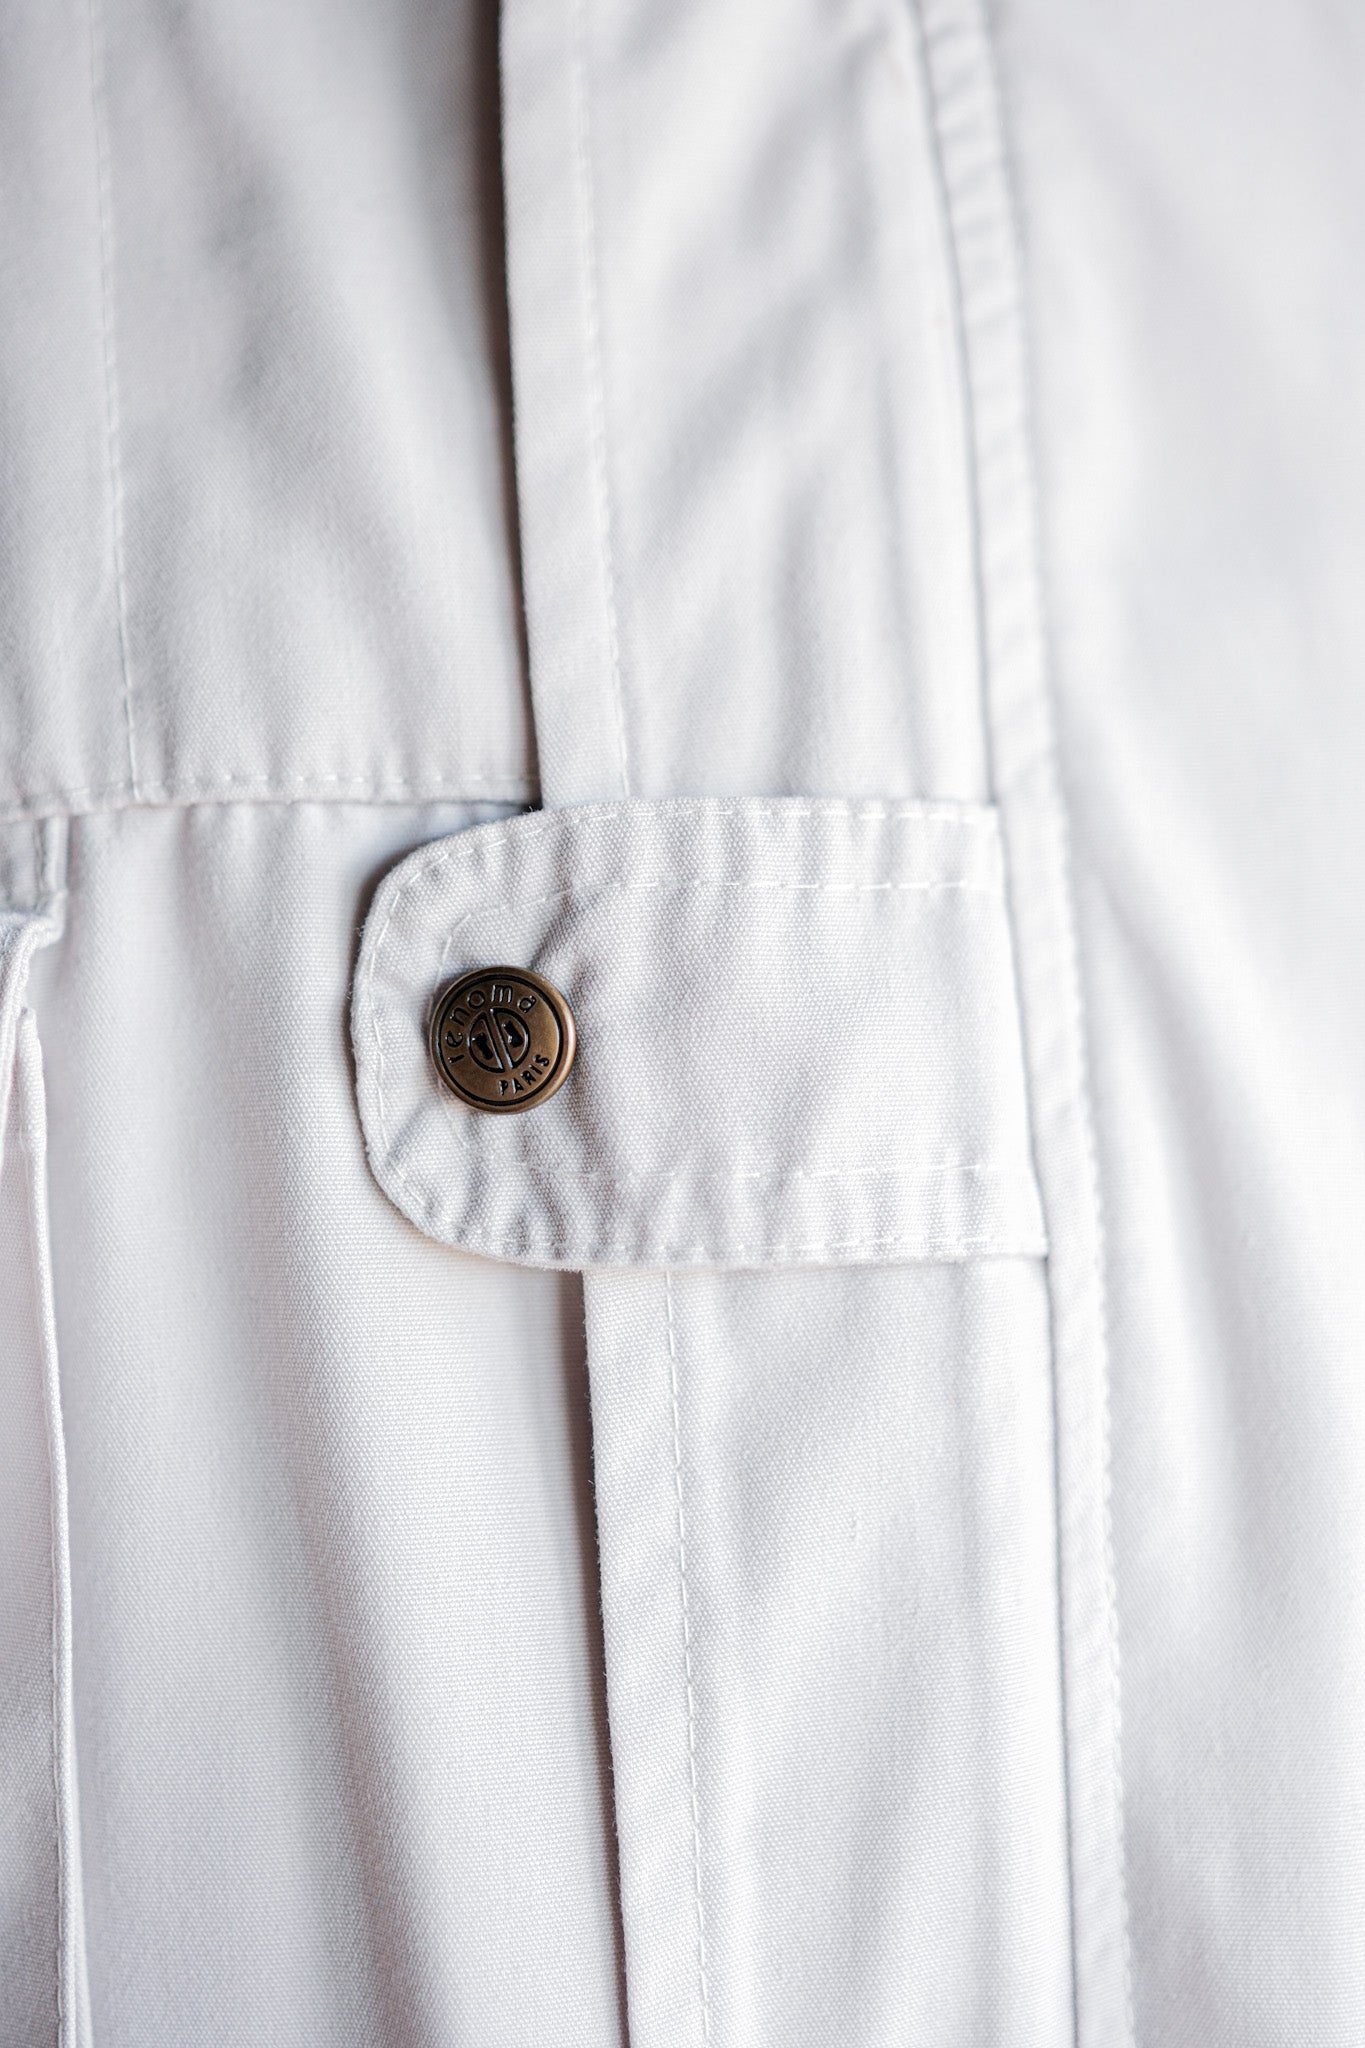 [~90's] Old Renoma Paris Detachable Sleeve Multi Pocket Jacket With Liner